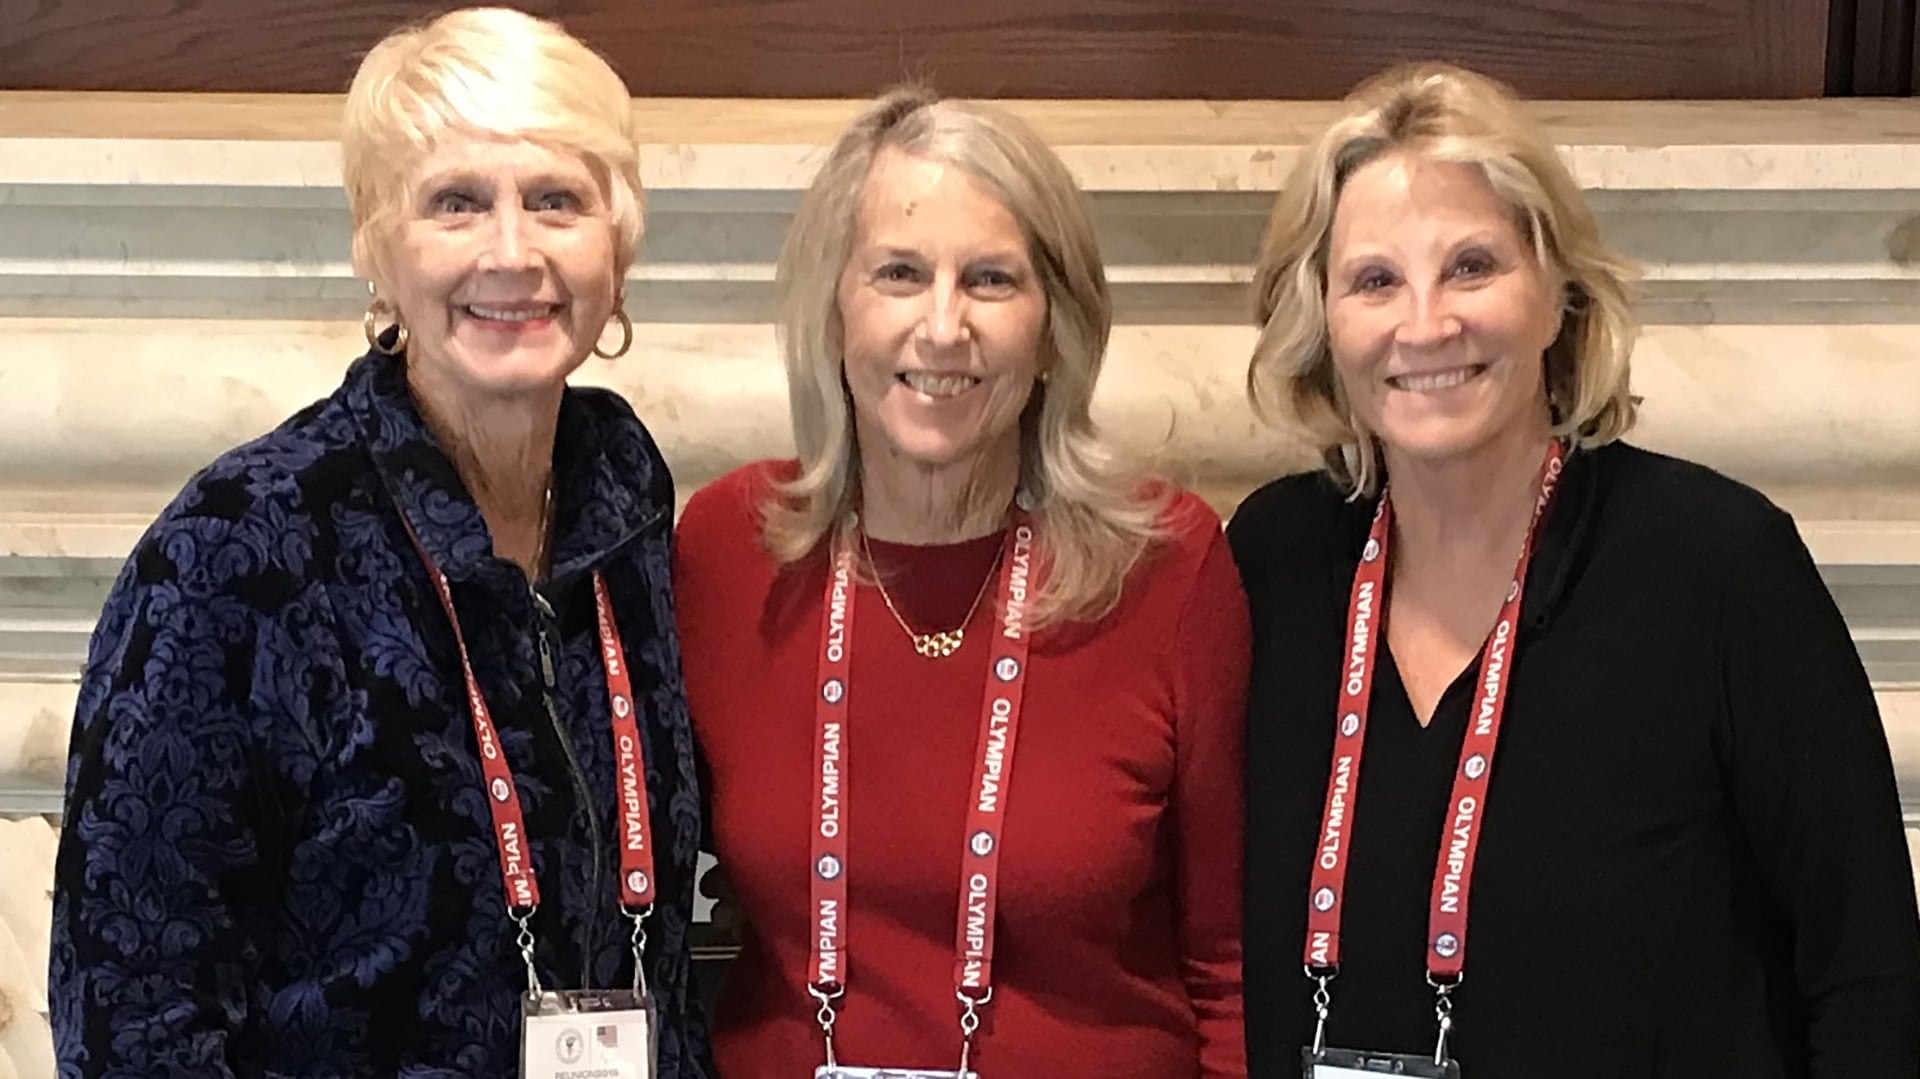 Donna de Varona, Cathy Ferguson and Anne Warner Cribbs pose for photo during the Team USA 2019 reunion.